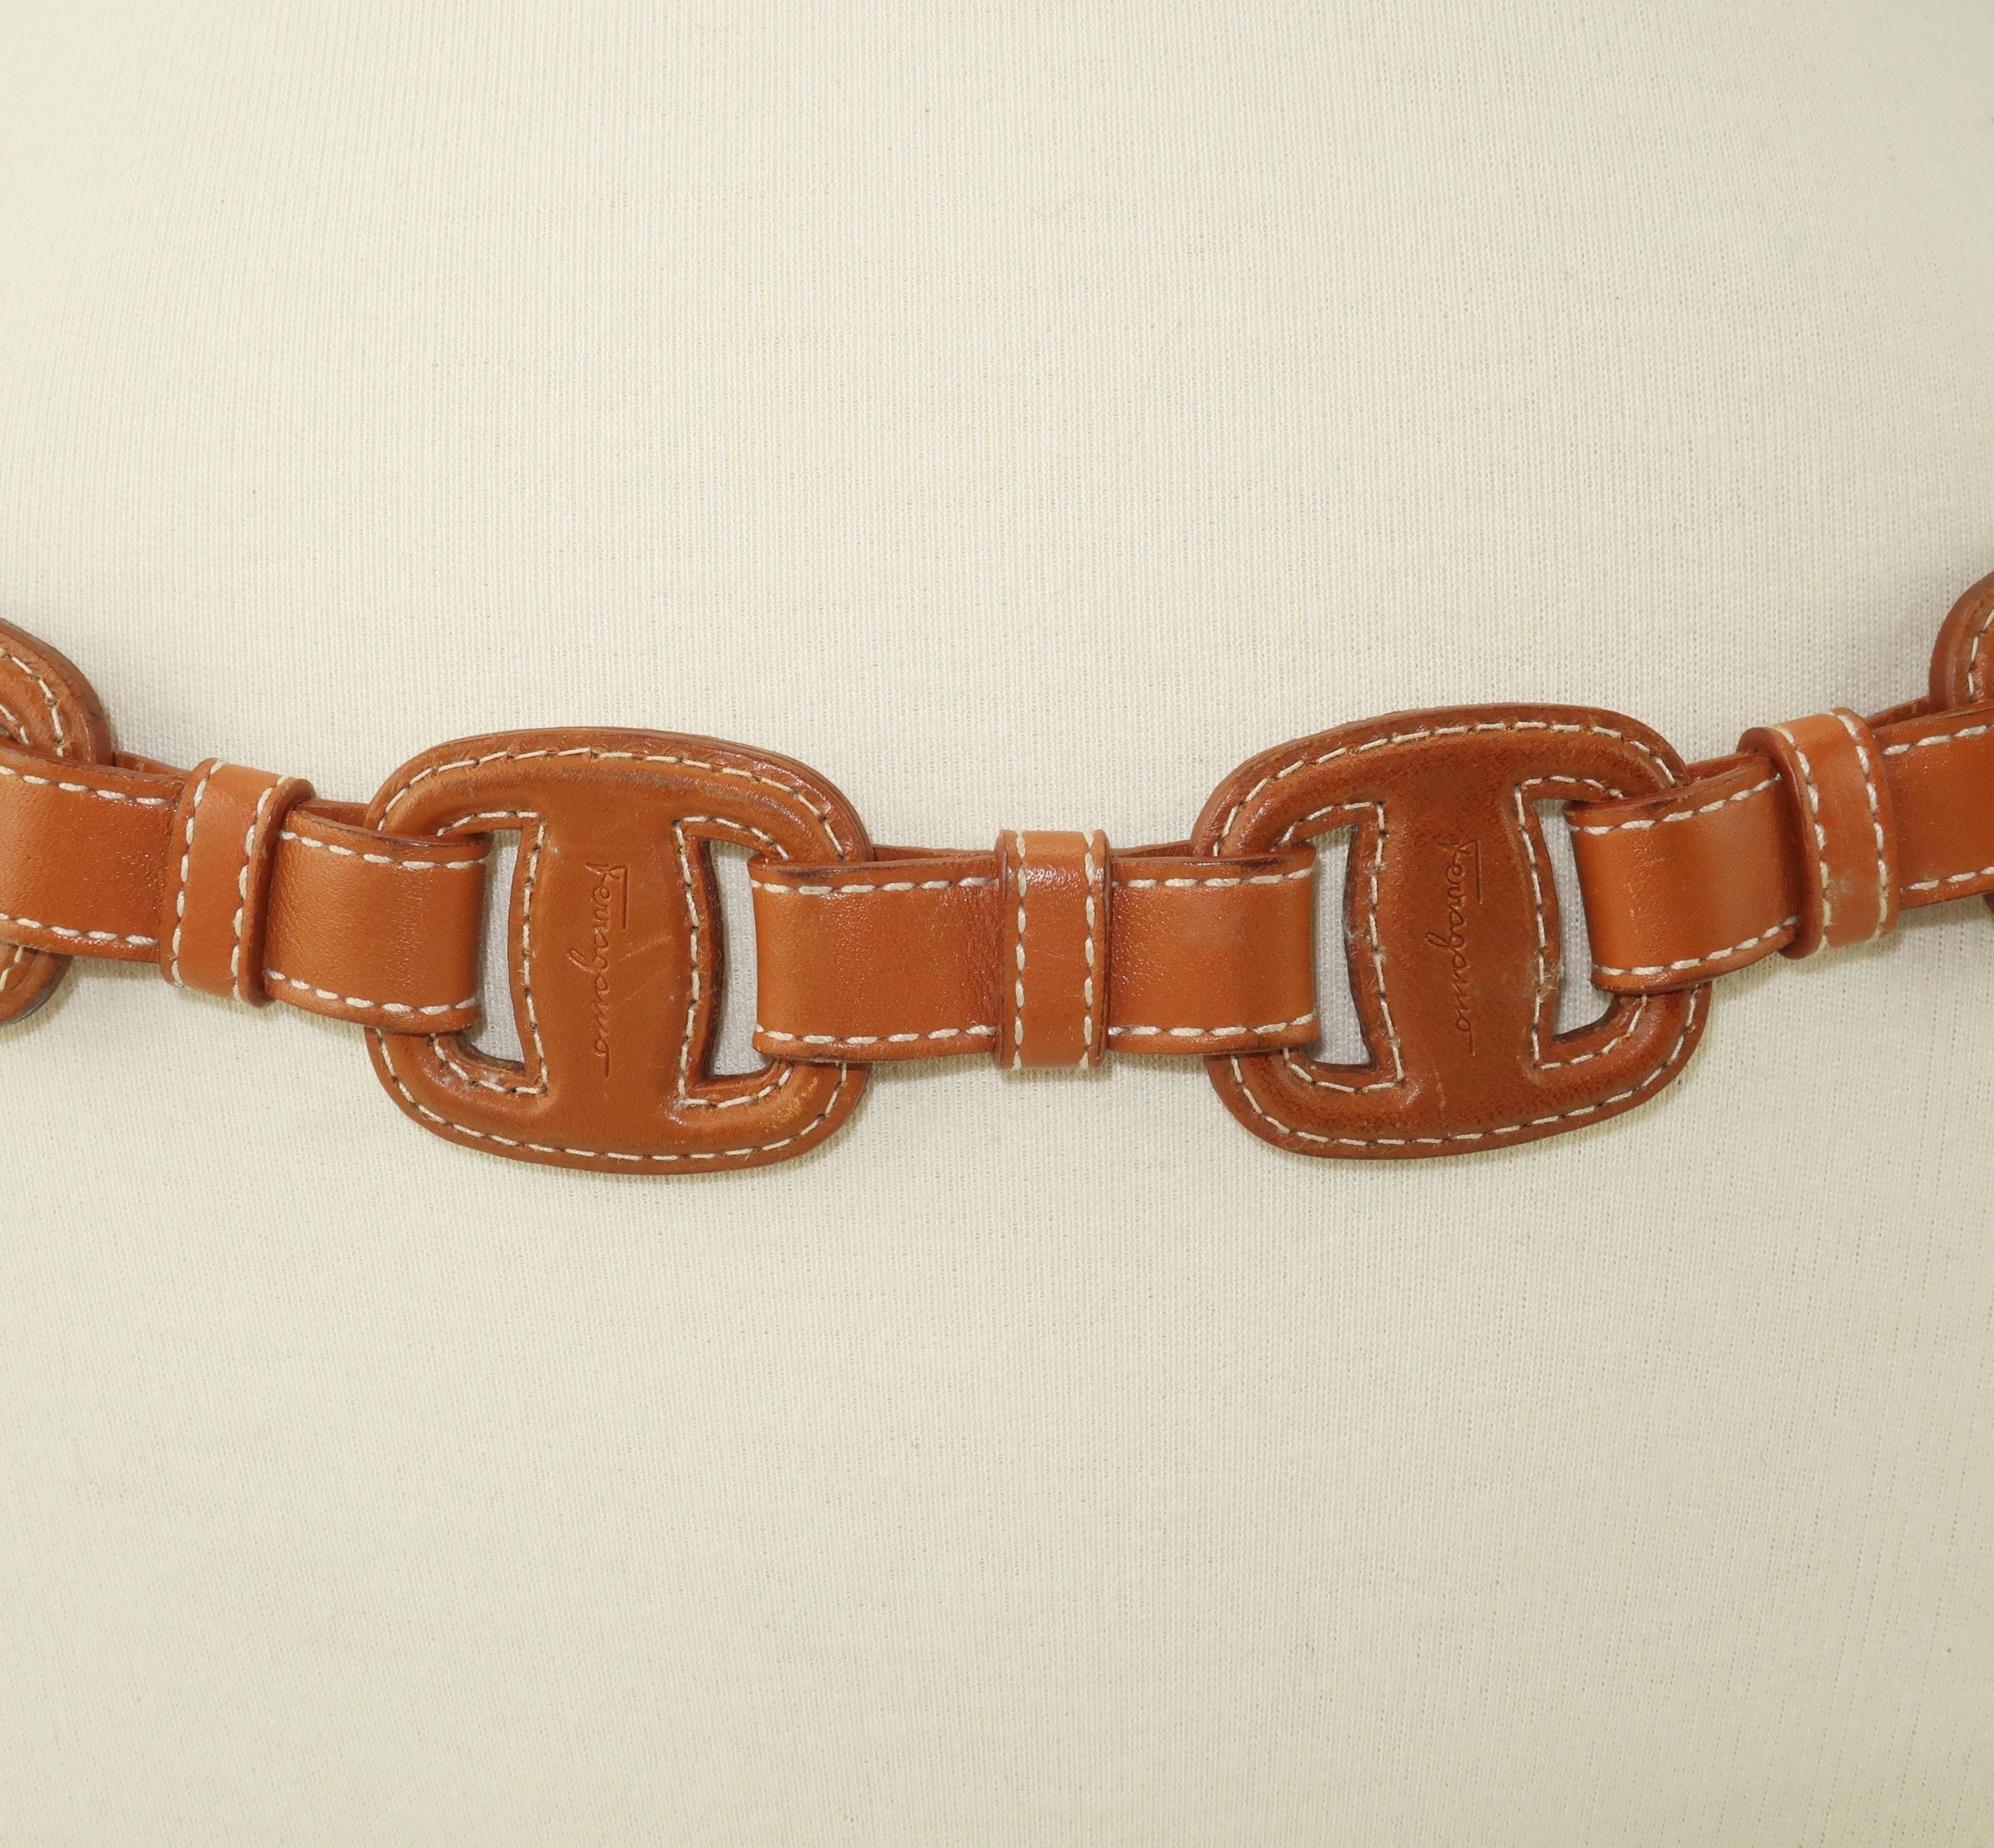 Brown Ferragamo Equestrian Inspired Tan Leather Logo Belt